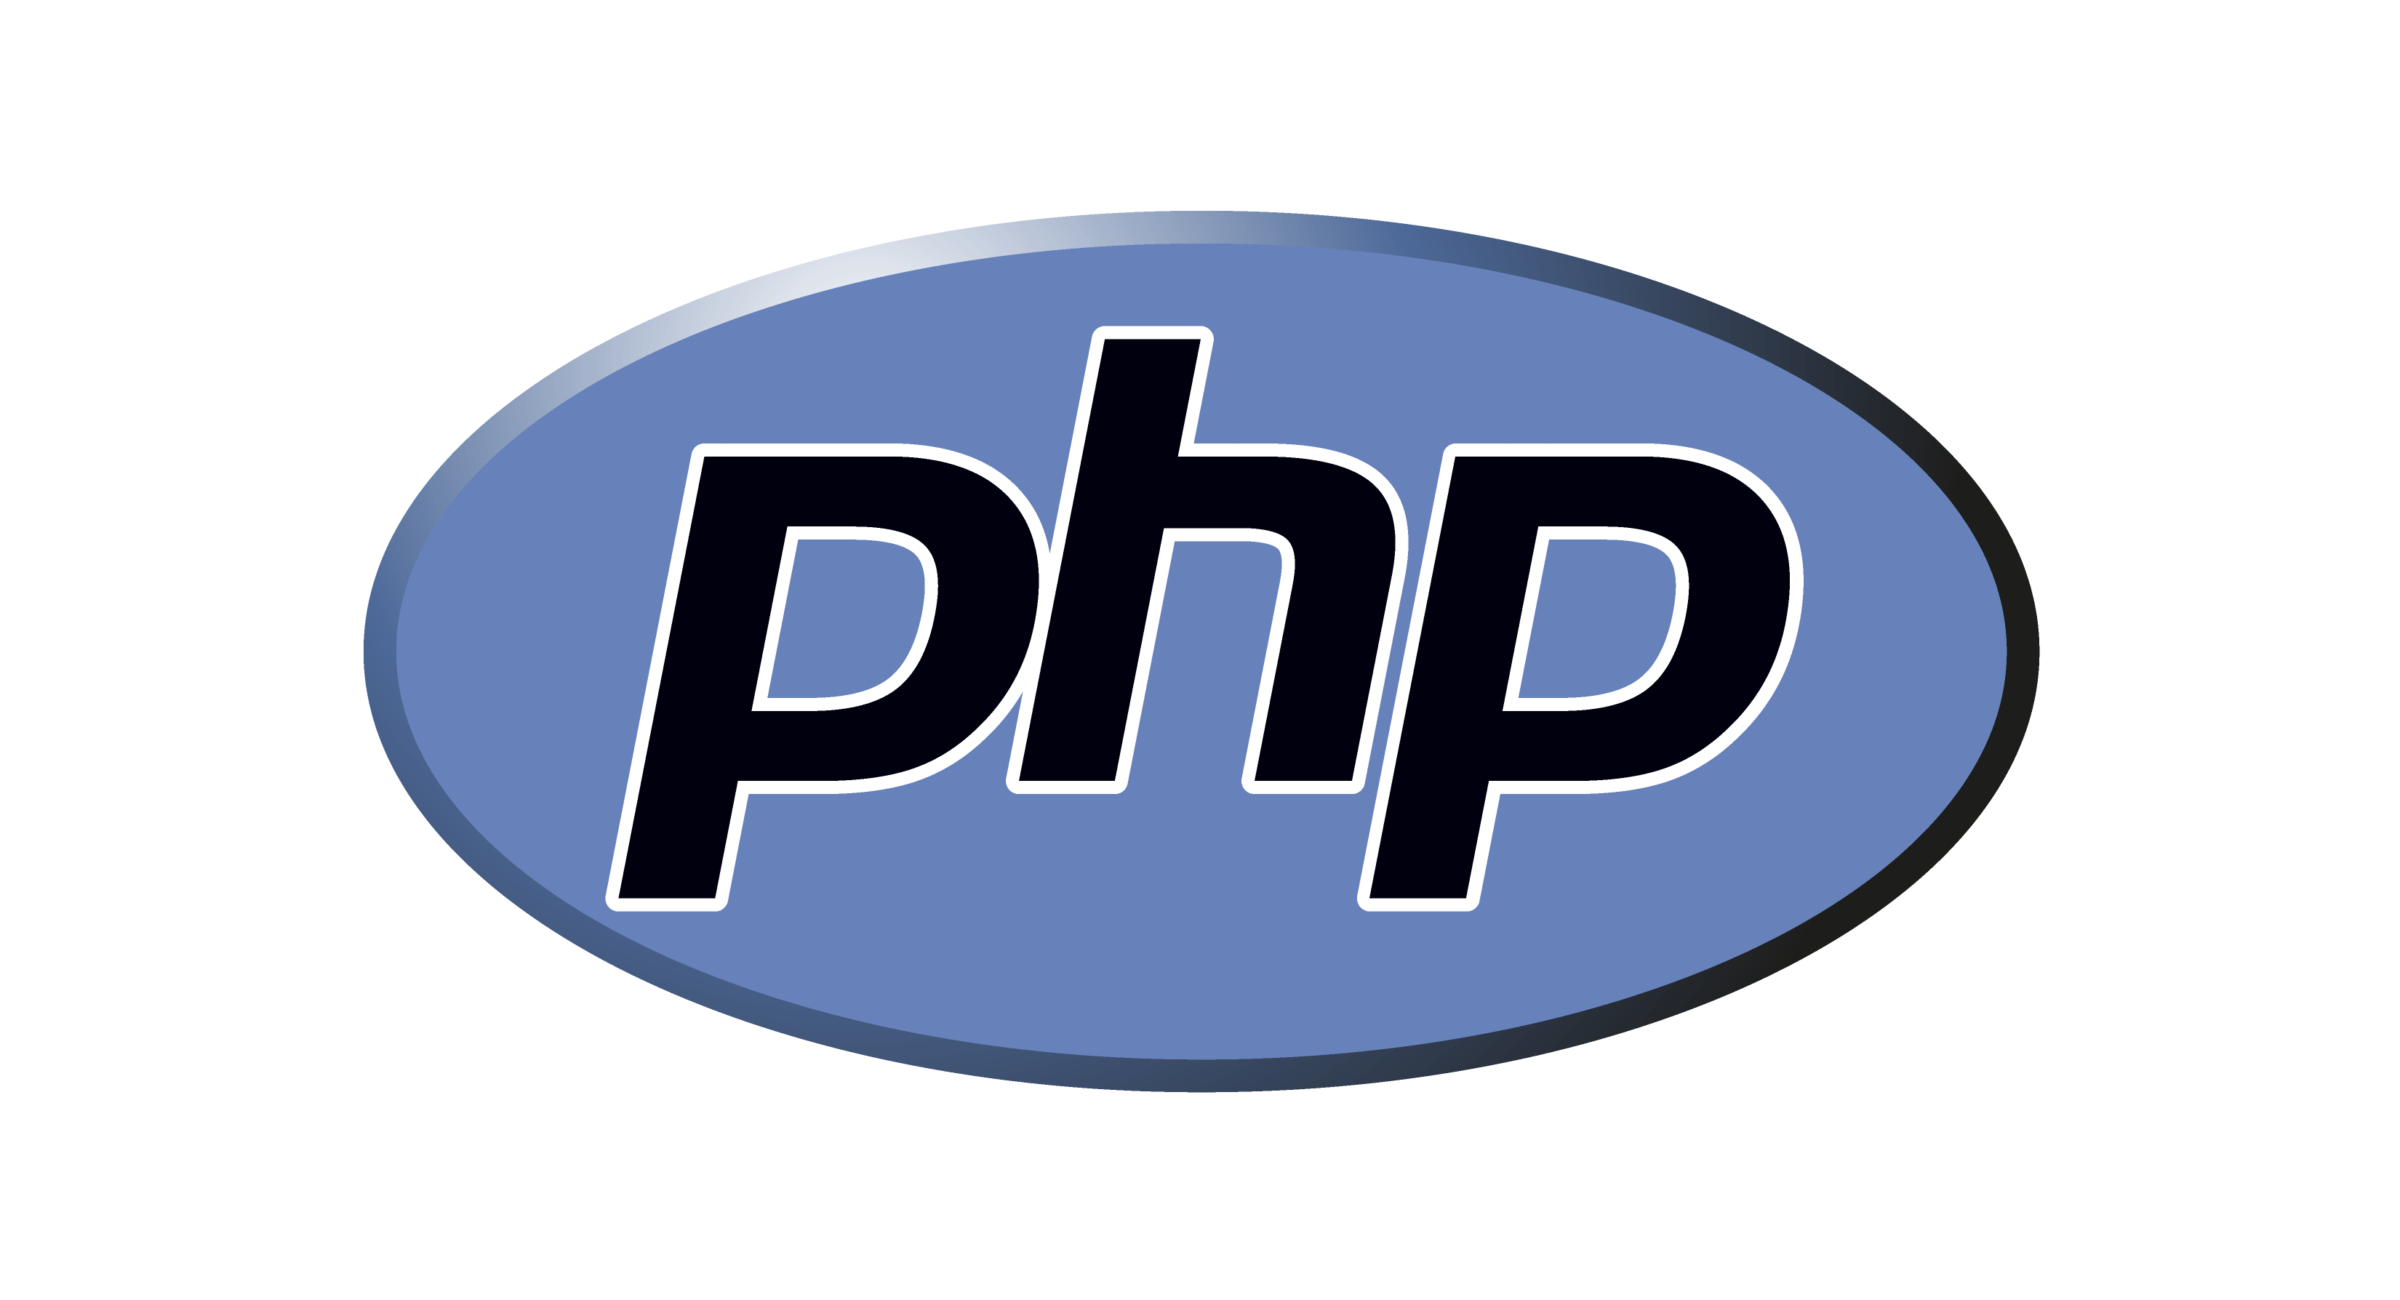 Php 7.0. Php логотип. Logo язык программирования. Программирование логотип. Php картинка.